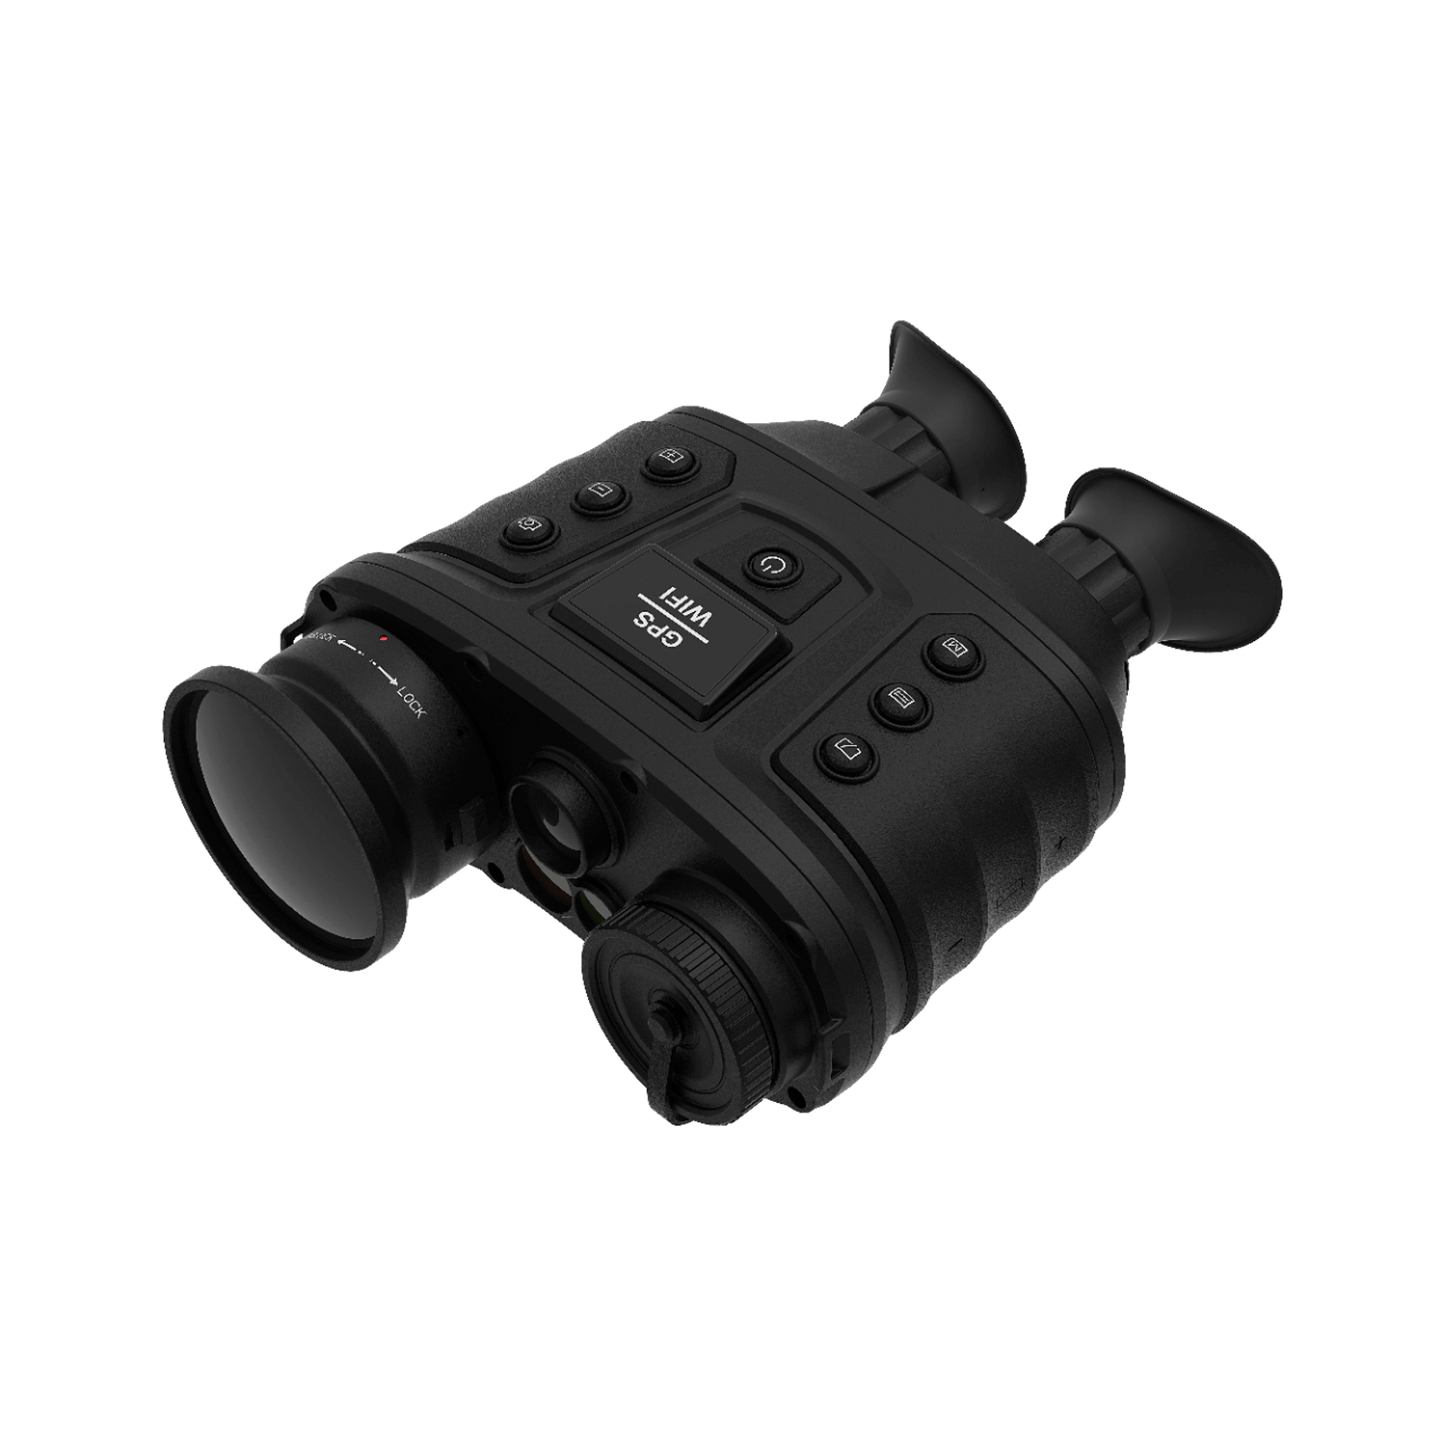 Cape Thermal Imaging Binoculars for Sale - Hikvision DS-2TS36-75VI/WL Multifunction heat vision binoculars